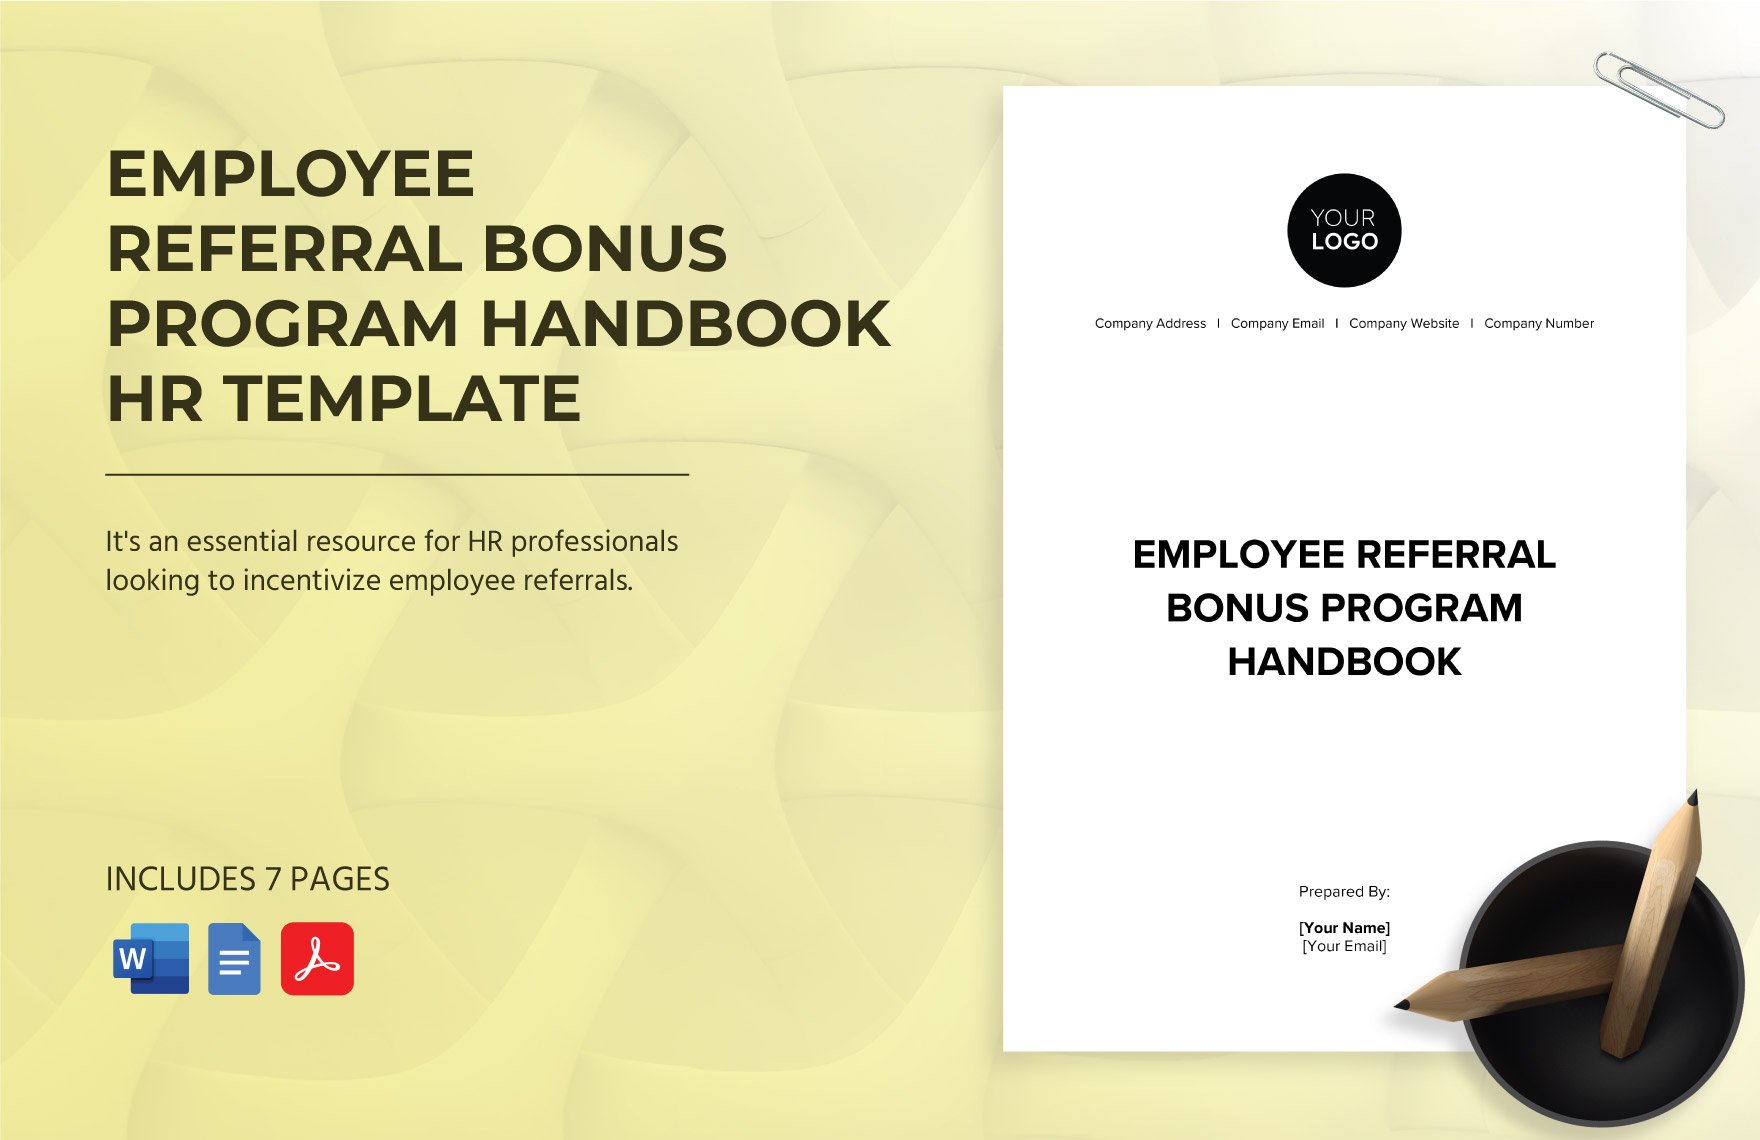 Employee Referral Bonus Program Handbook HR Template in Word, Google Docs, PDF